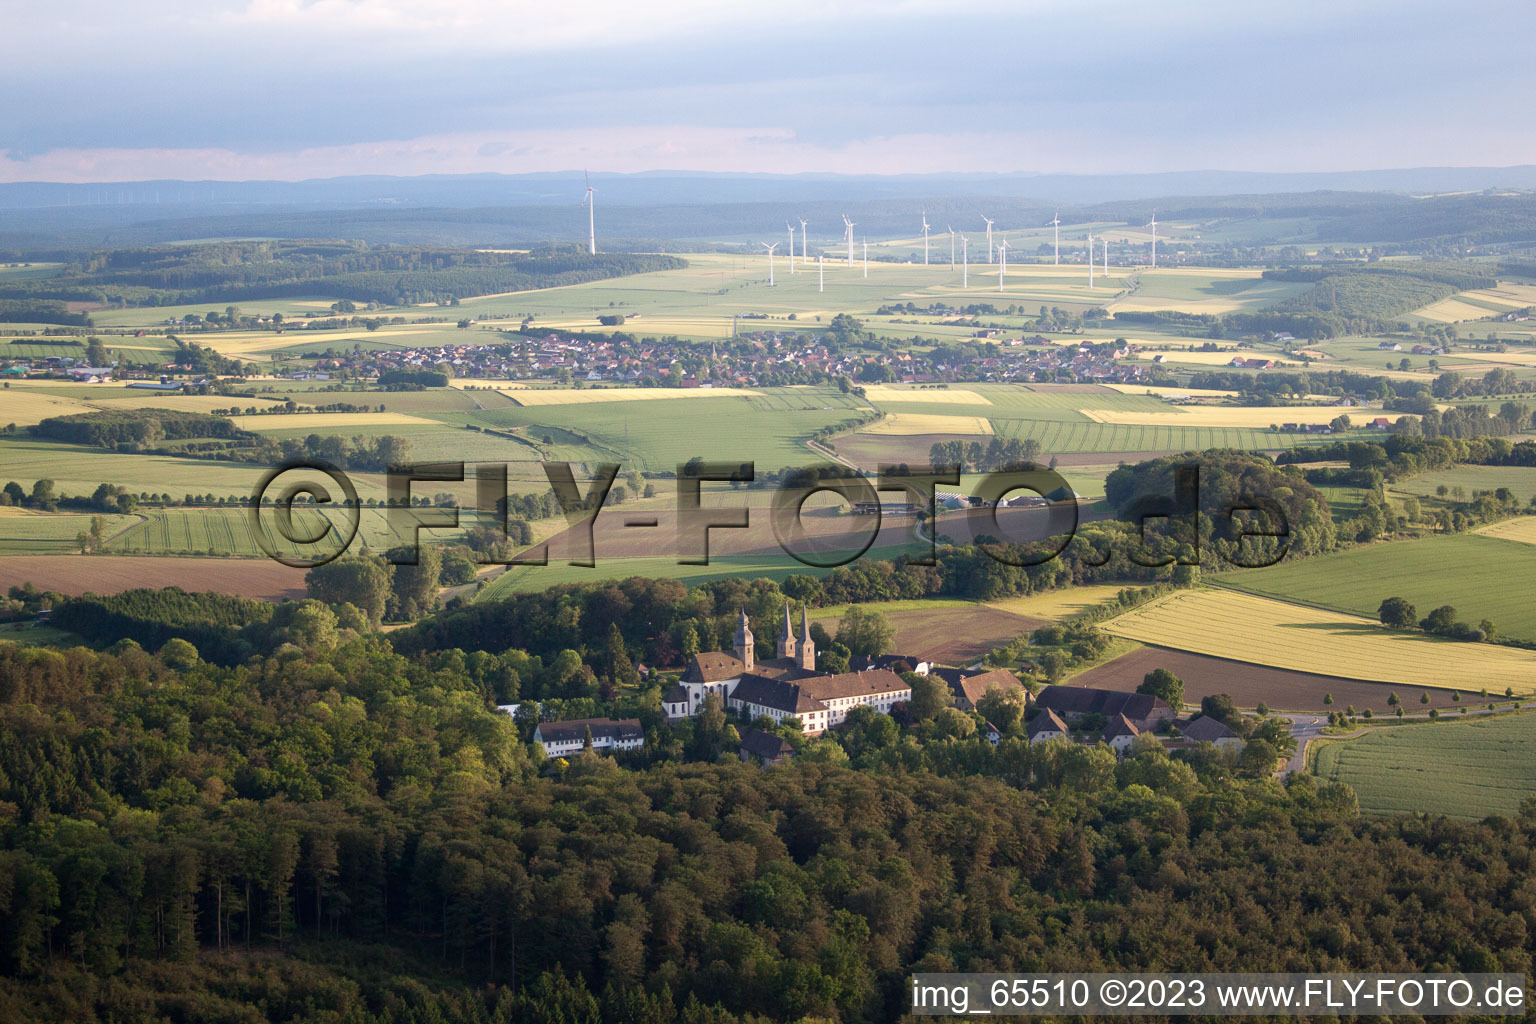 Kleinenbreden in the state North Rhine-Westphalia, Germany from above